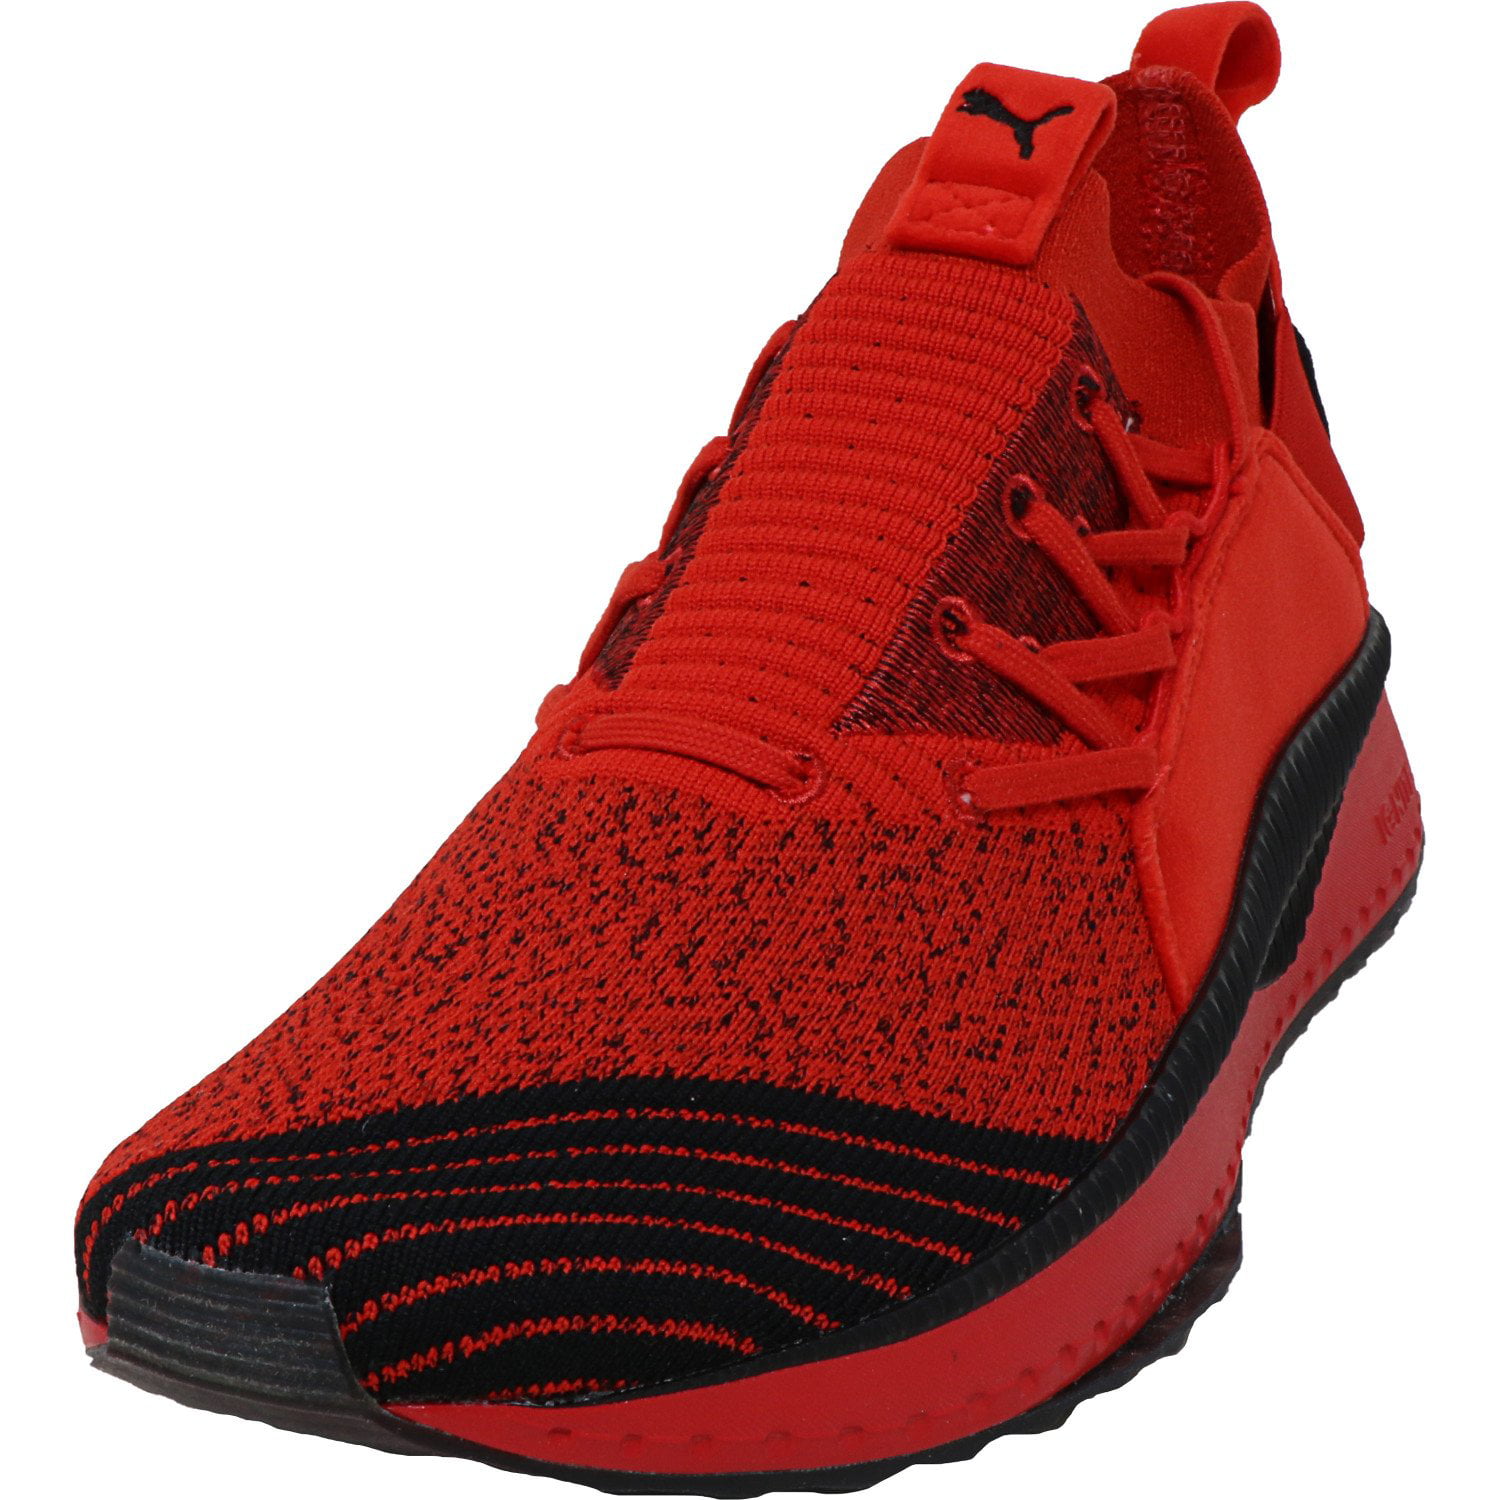 Buy Puma Mens Tsugi Jun Fubu Bhm High Risk Red Black Ankle-High Fabric  Sneaker - 10M Online in Thailand. 981607032